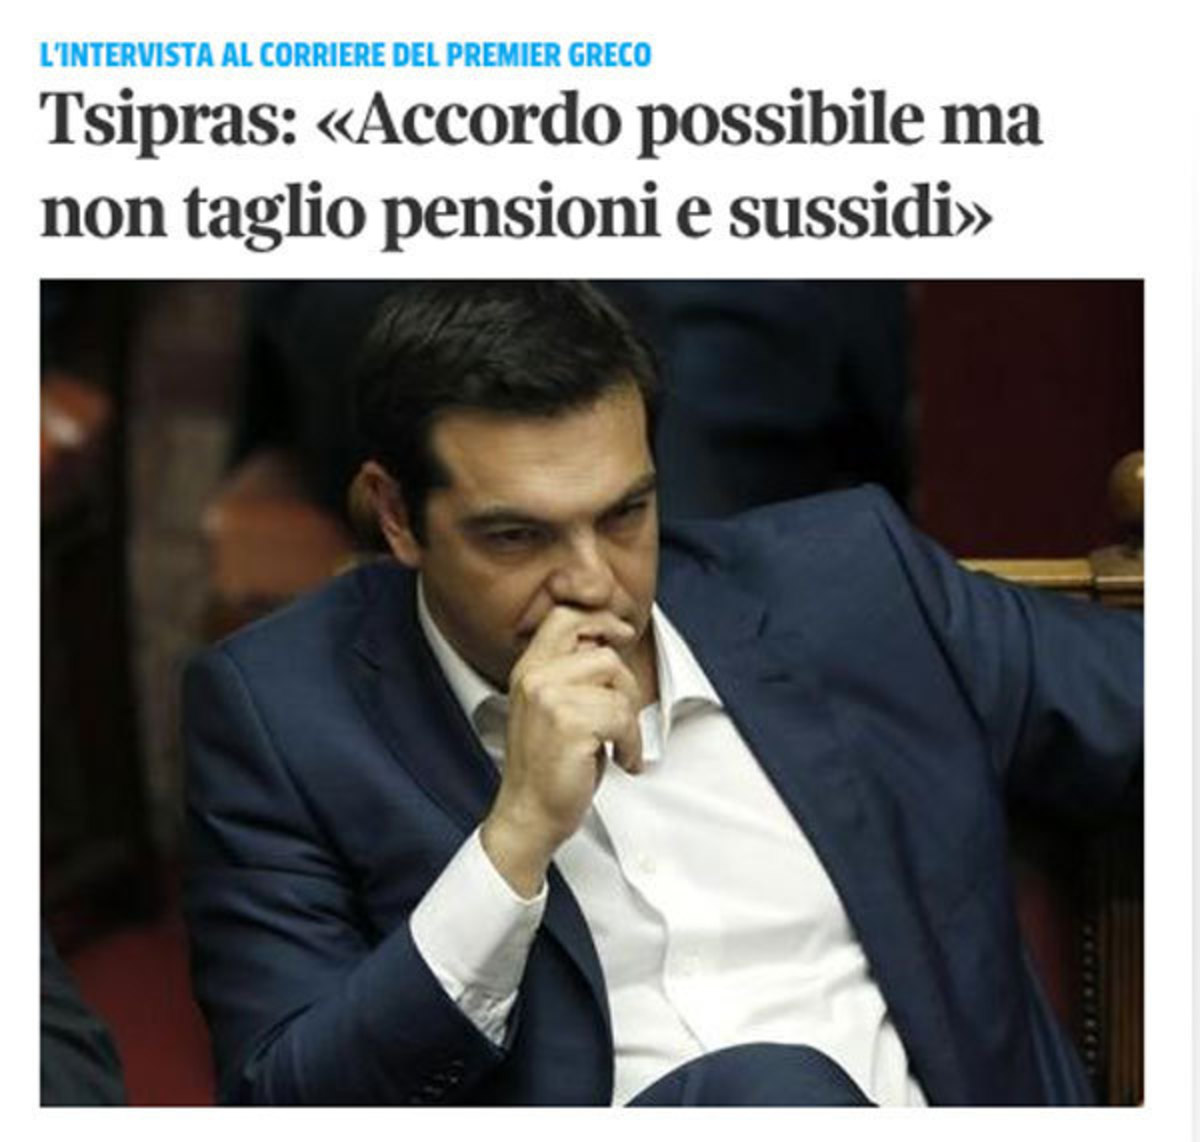 Corriere della Sera: Αλέξης Τσίπρας: Ένας ιππότης για την συνταξούλα – “Κόβει τον βήχα” των εκλογών στους υπουργούς και τους βουλευτές του